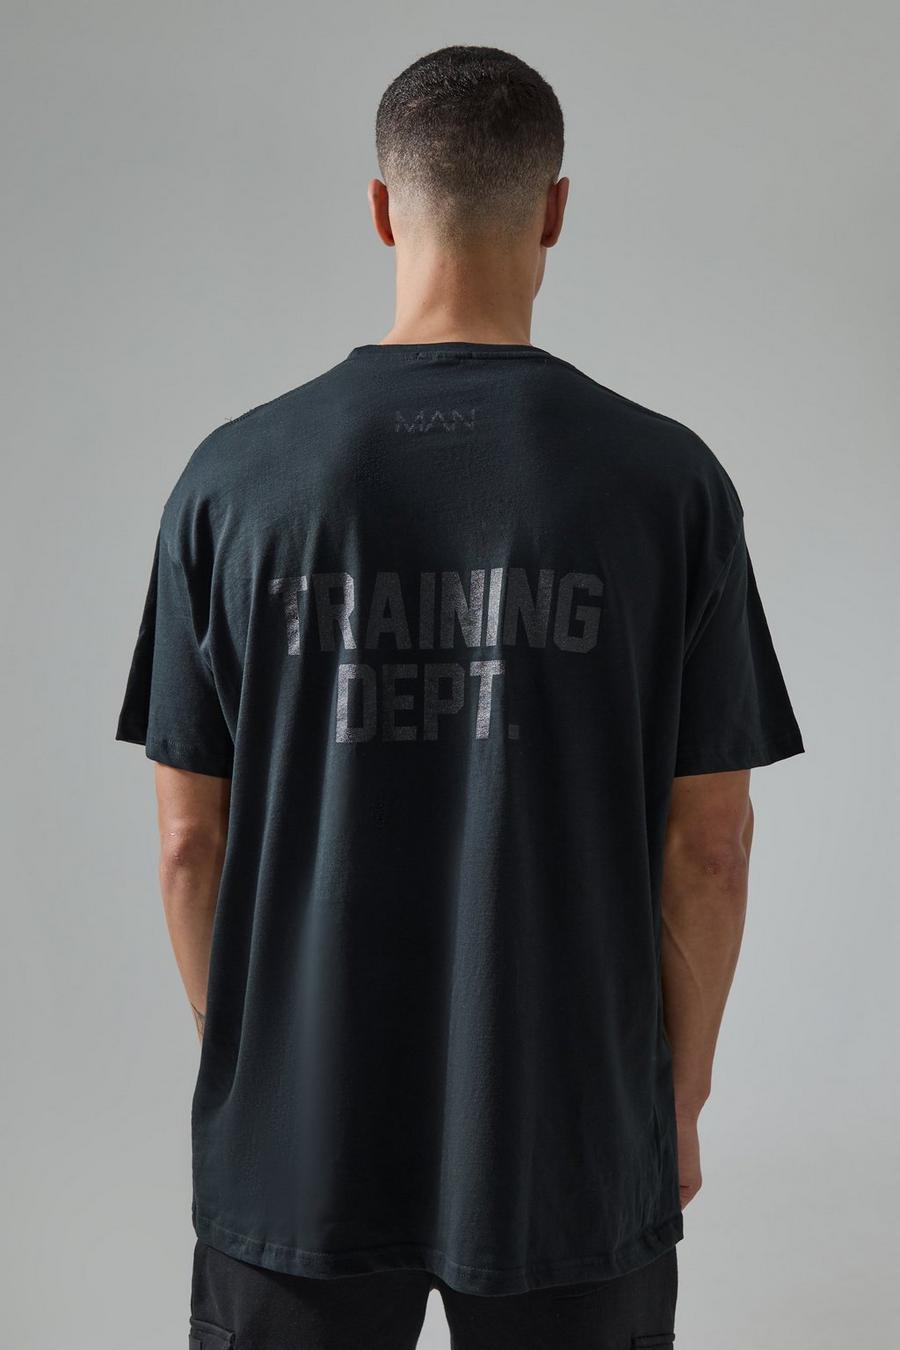 Black noir Active Training Dept Oversized Tshirt